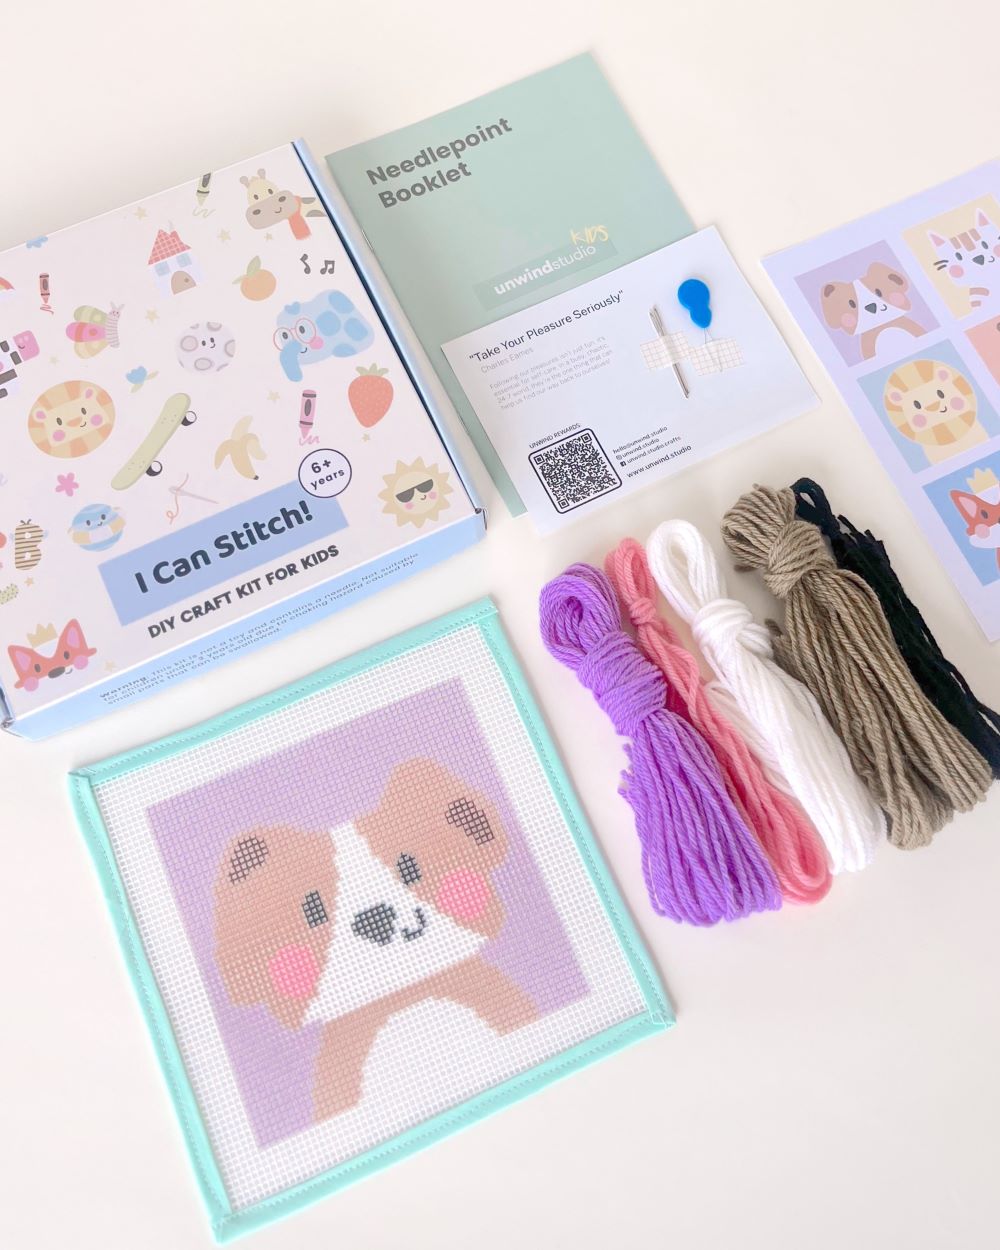 Dog Needlepoint Kit for Kids